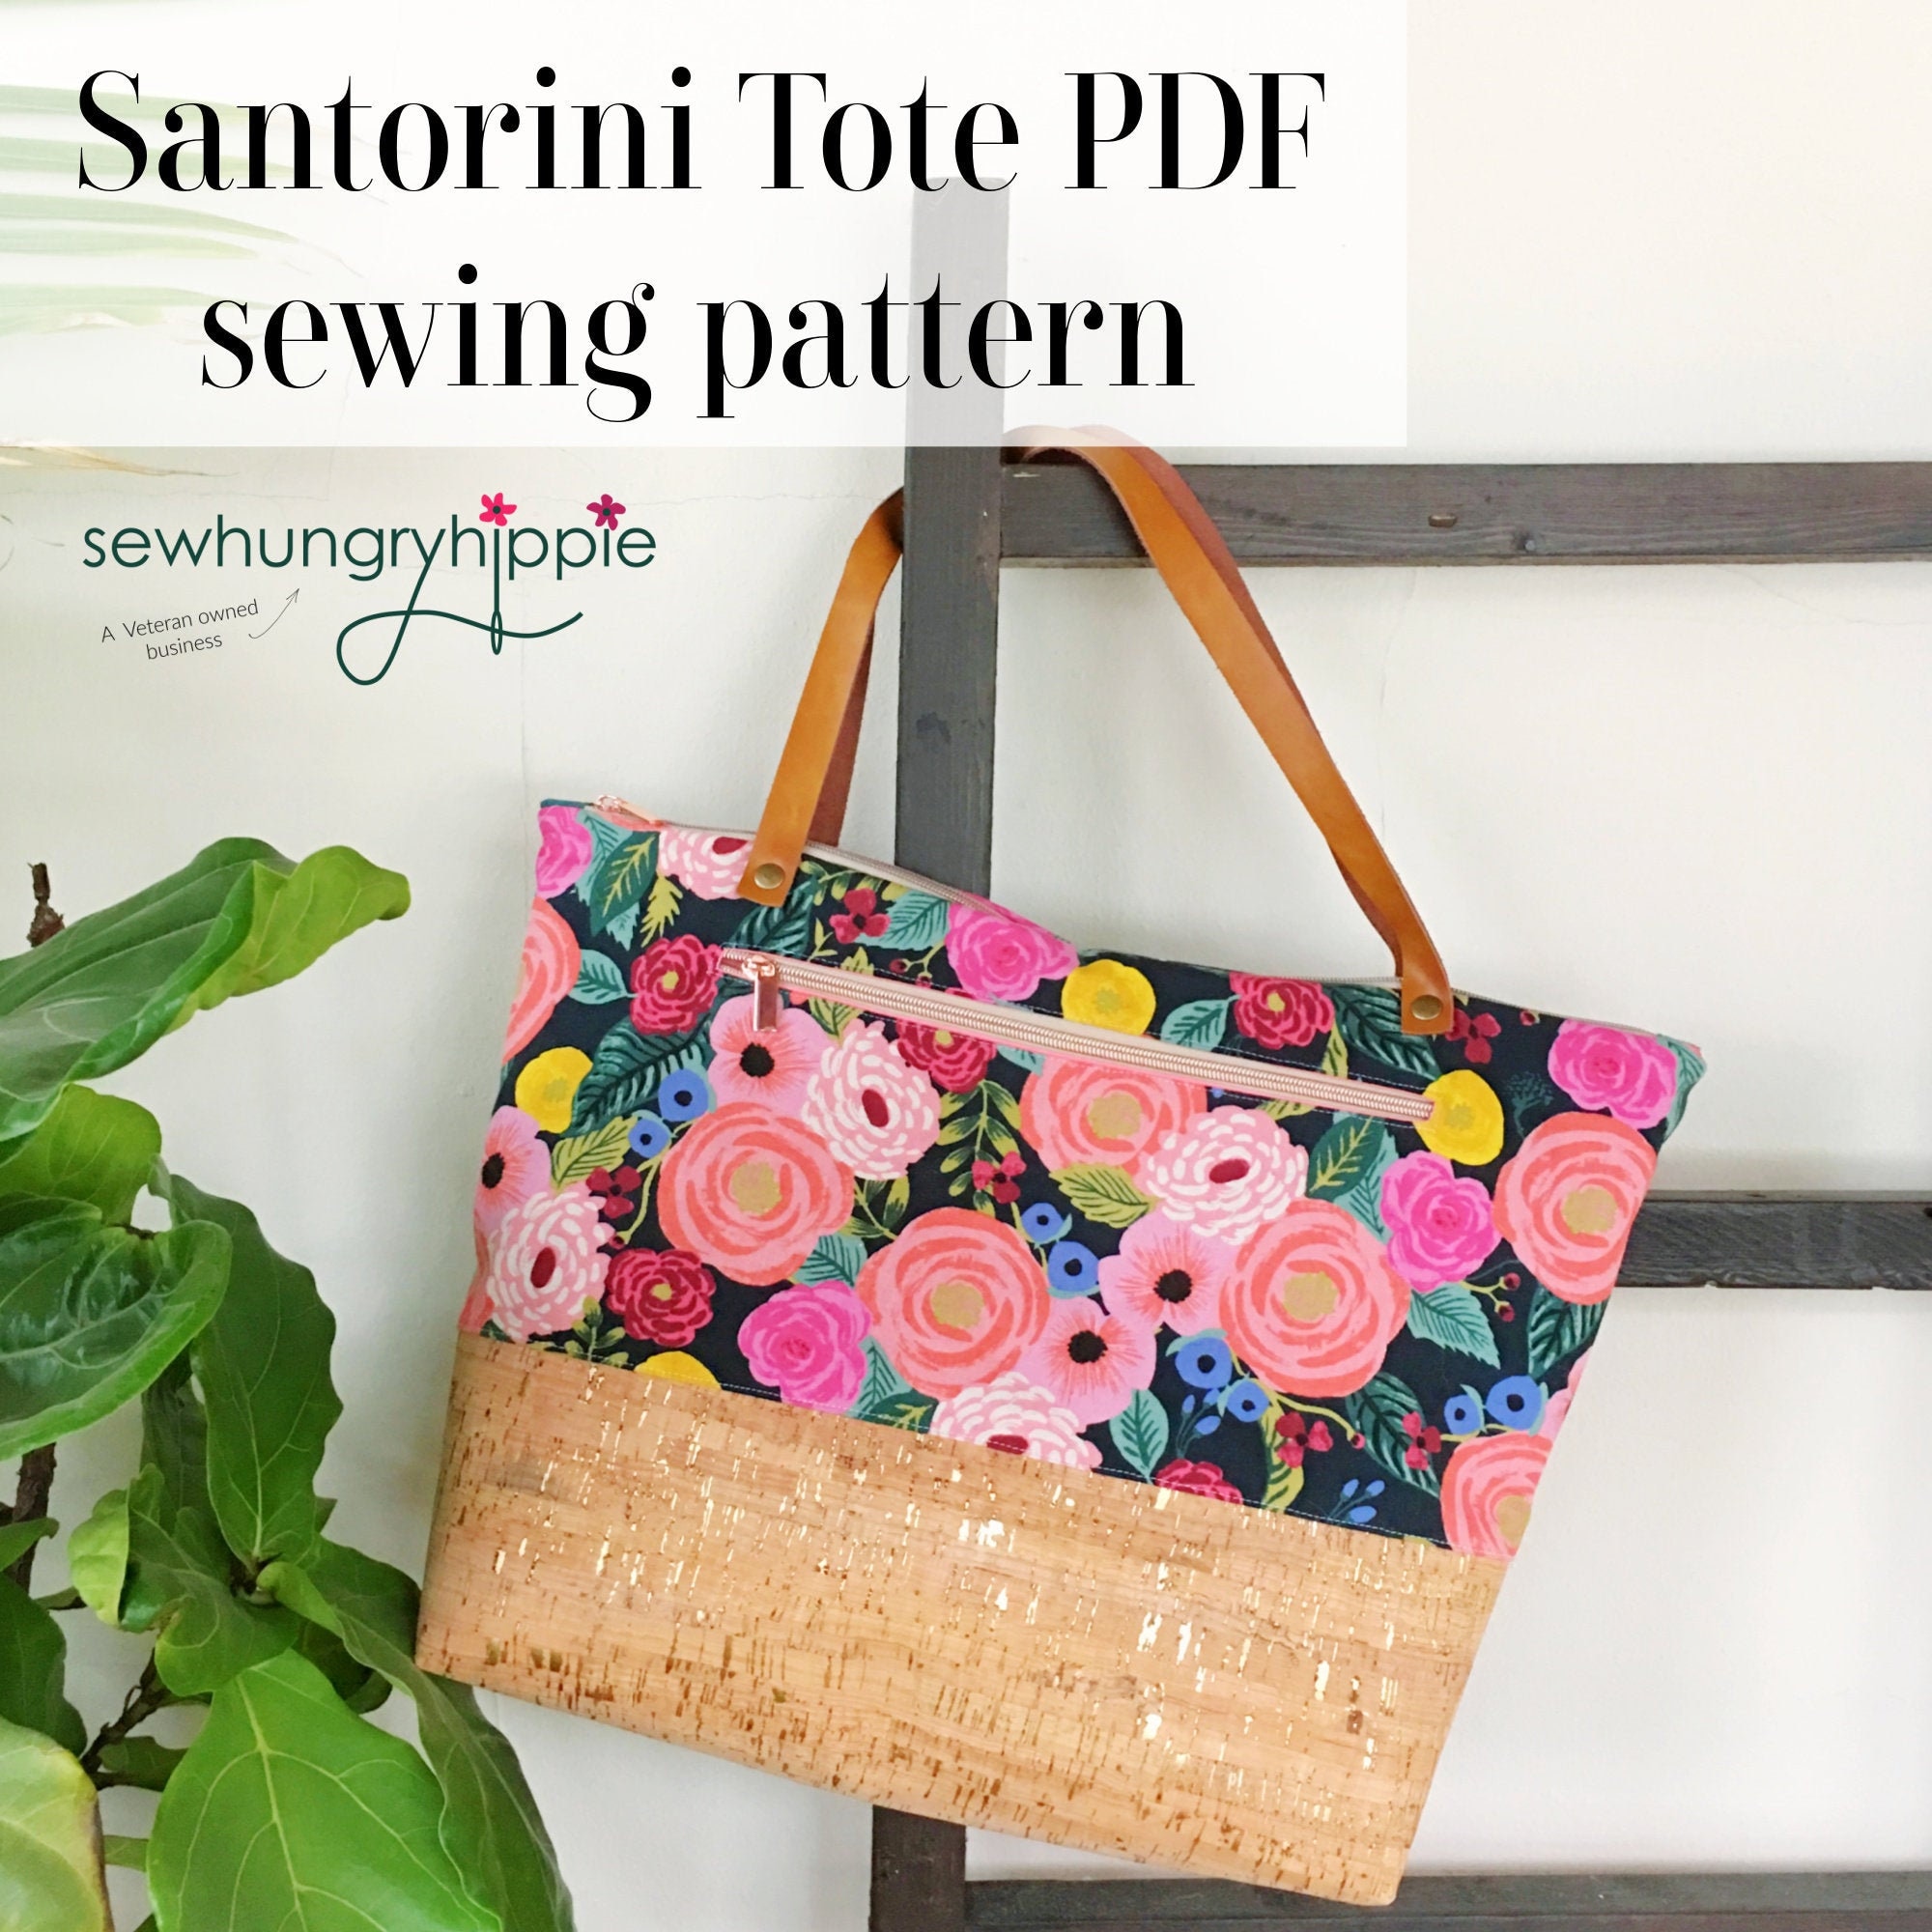 sewhungryhippie: LP Record bag sewing pattern